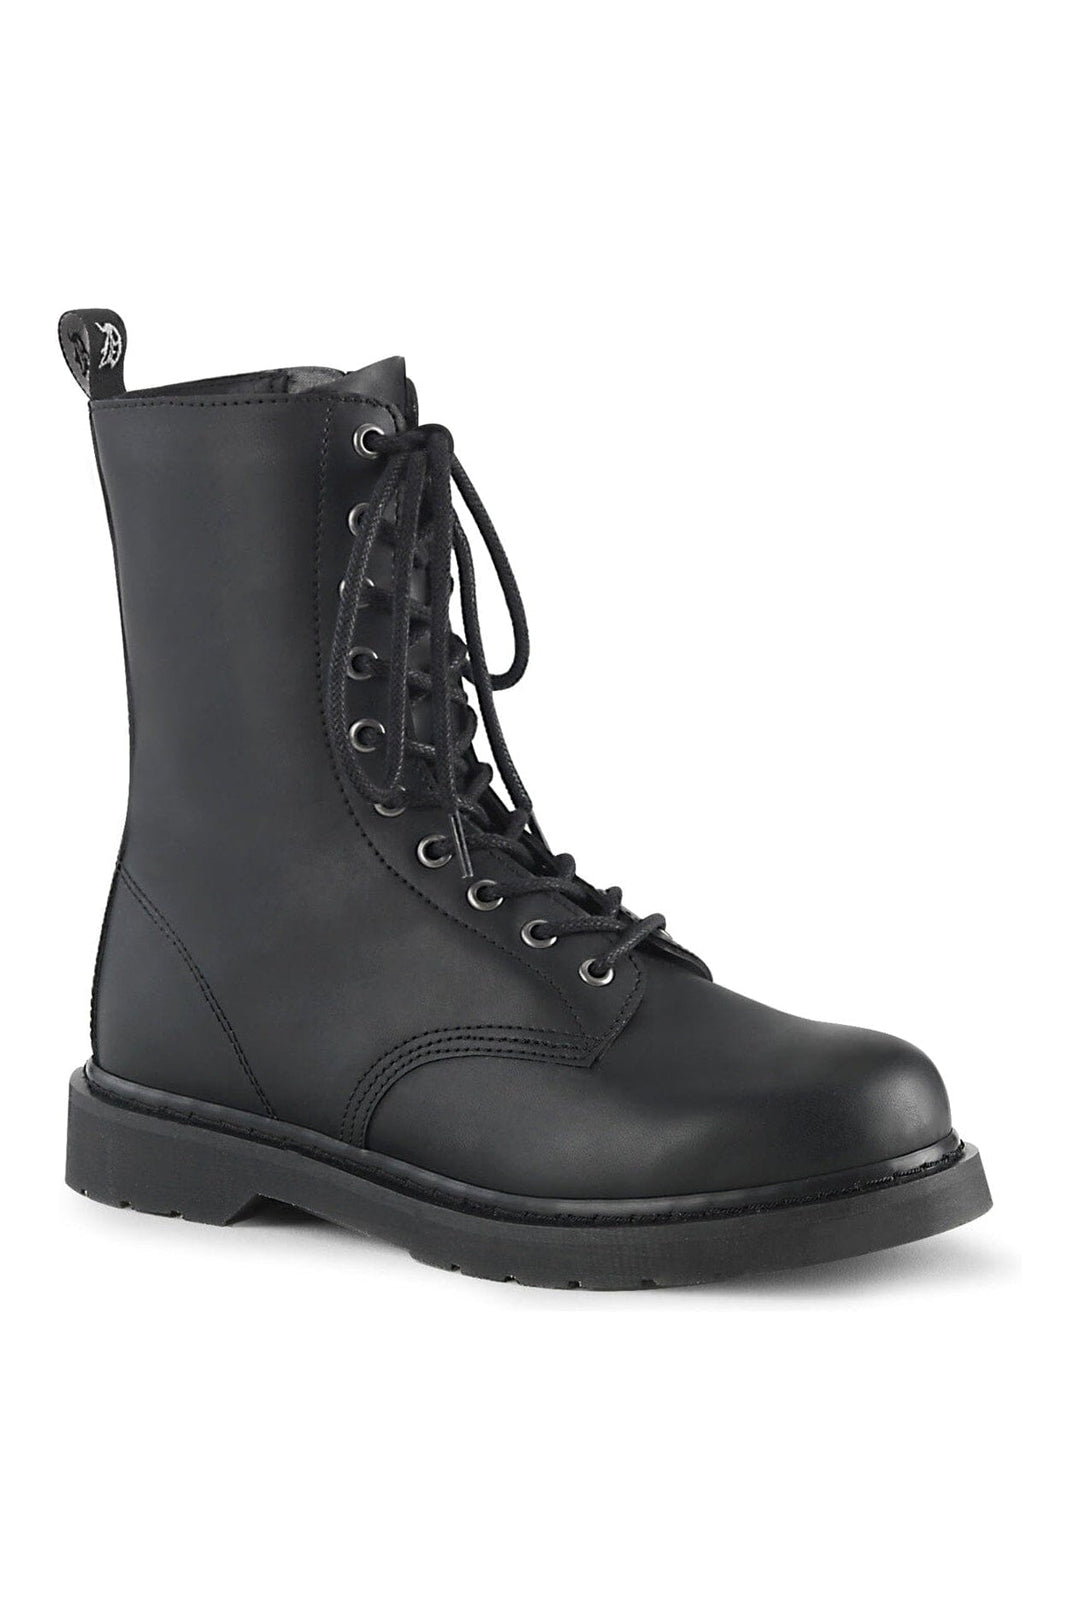 BOLT-200 Black Vegan Leather Knee Boot-Knee Boots-Demonia-Black-10-Vegan Leather-SEXYSHOES.COM